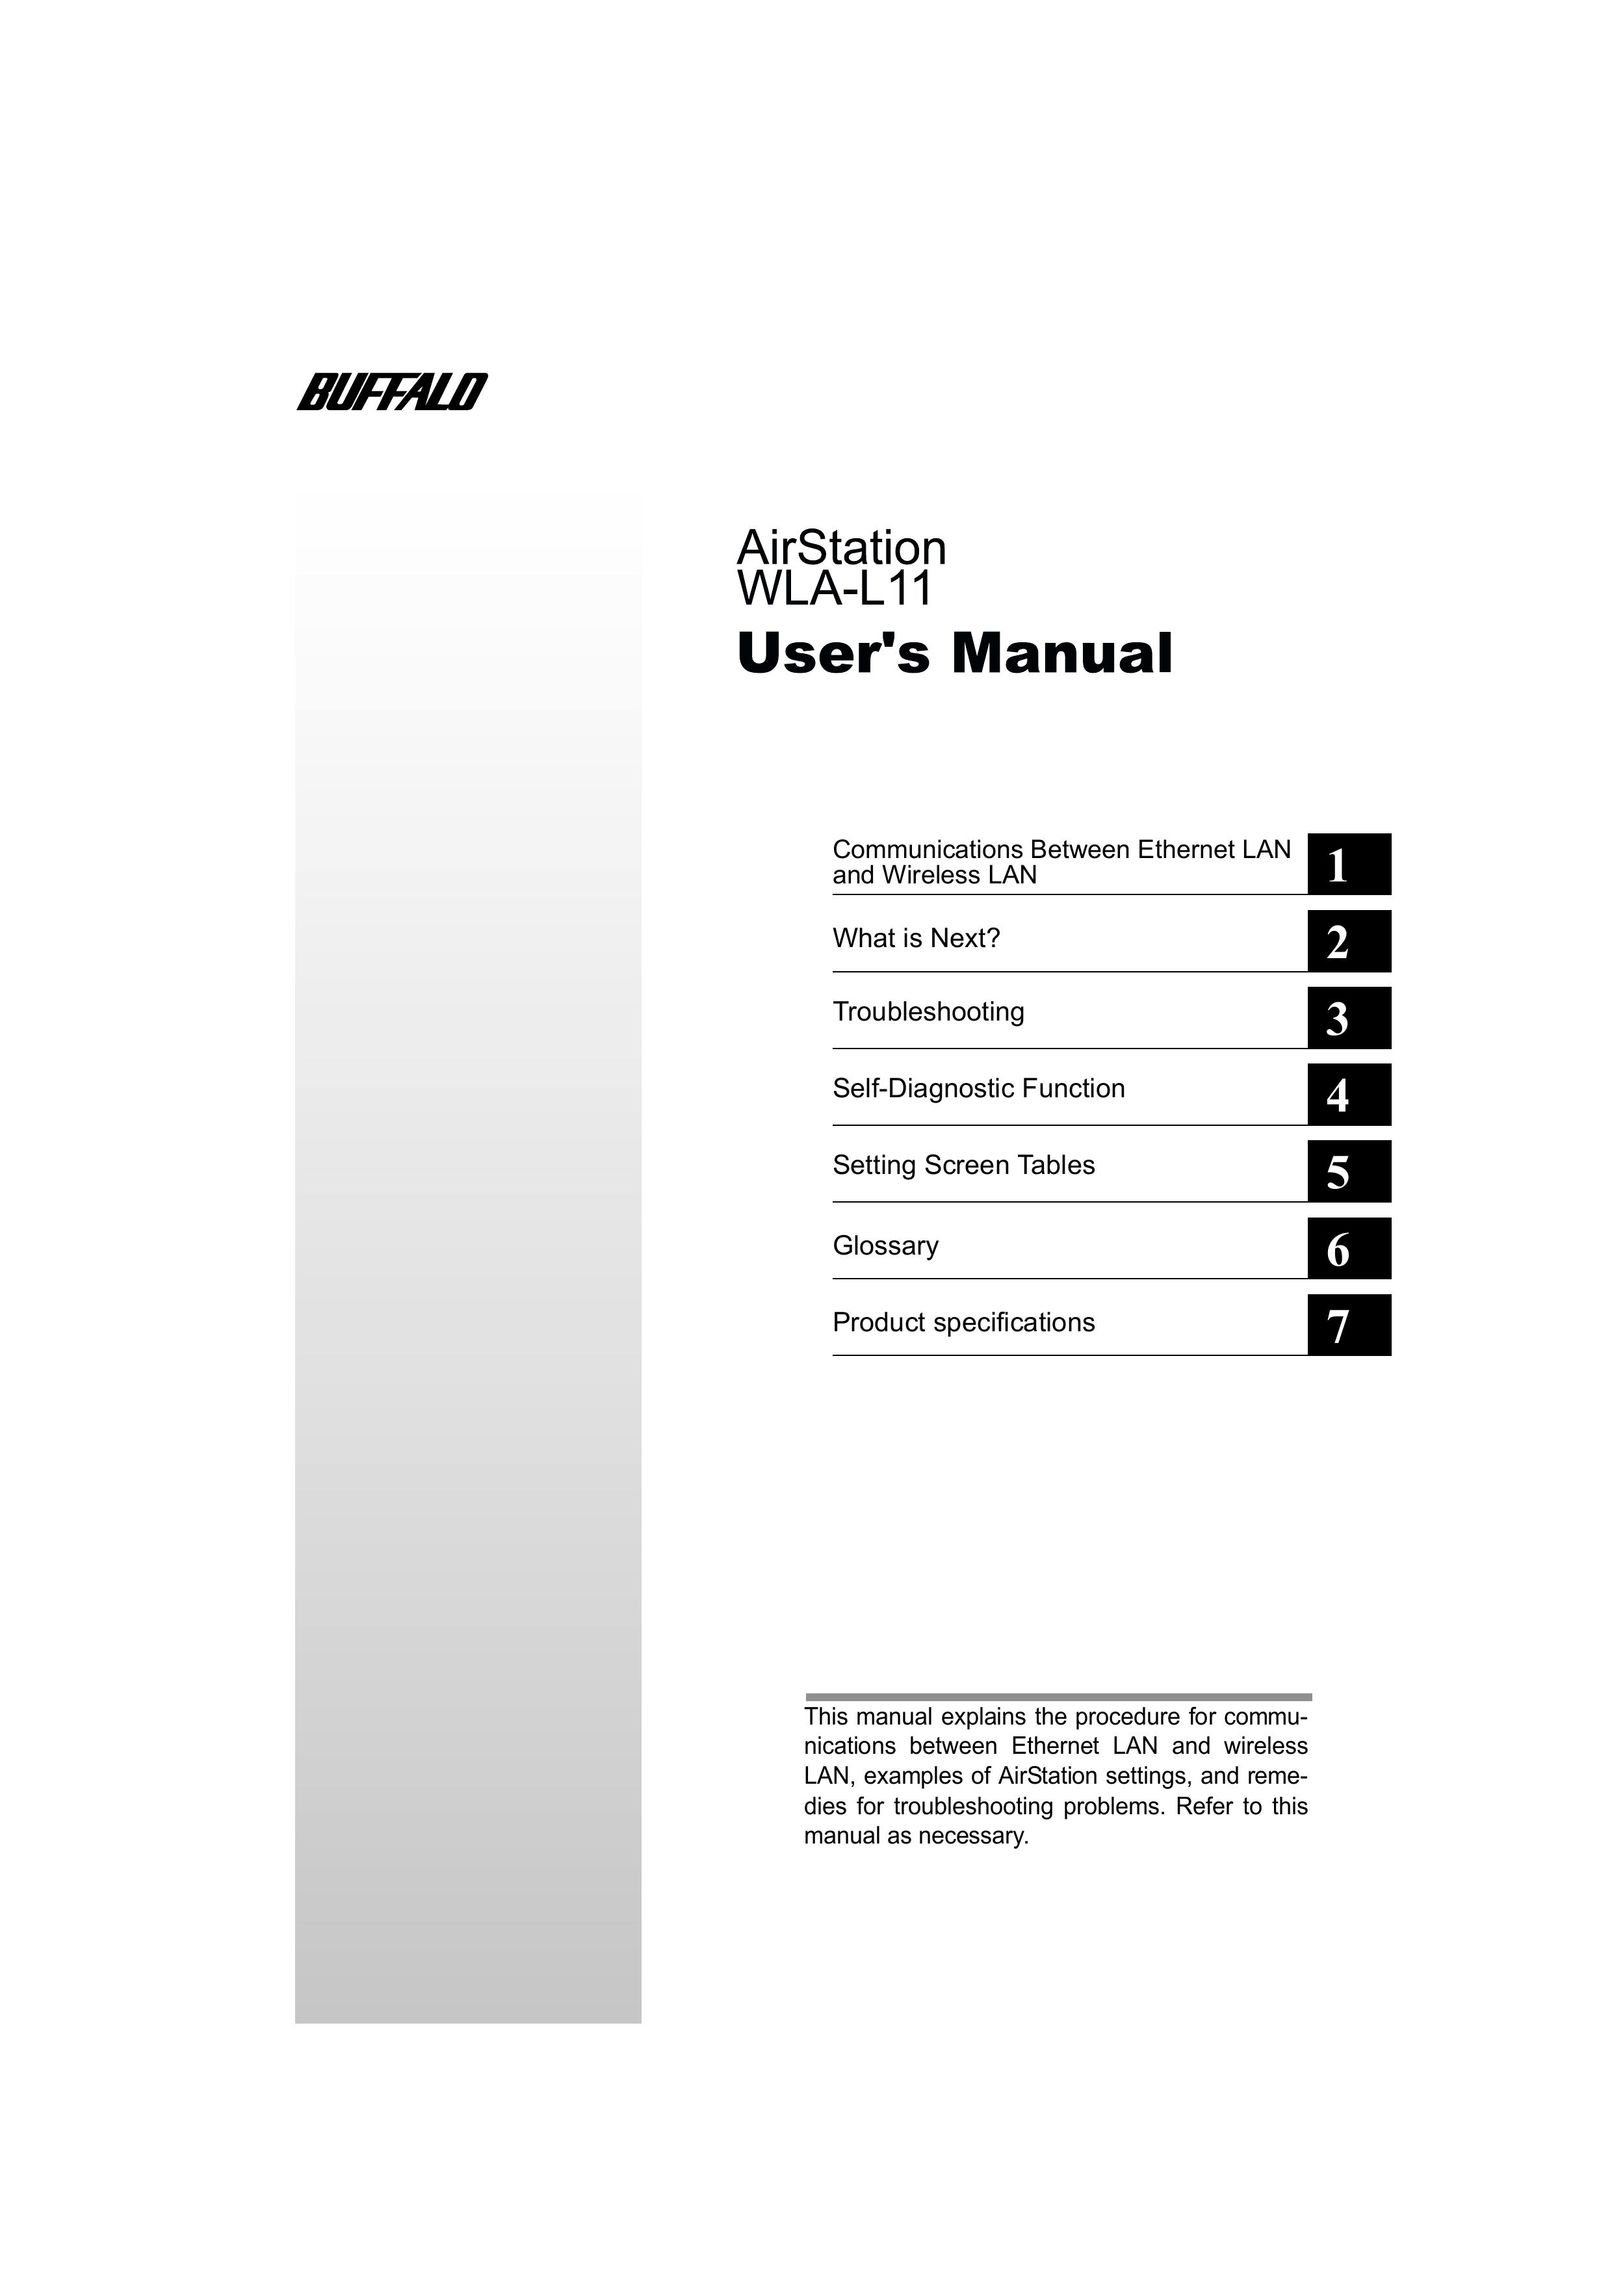 Buffalo Technology WLA-L11 Network Router User Manual